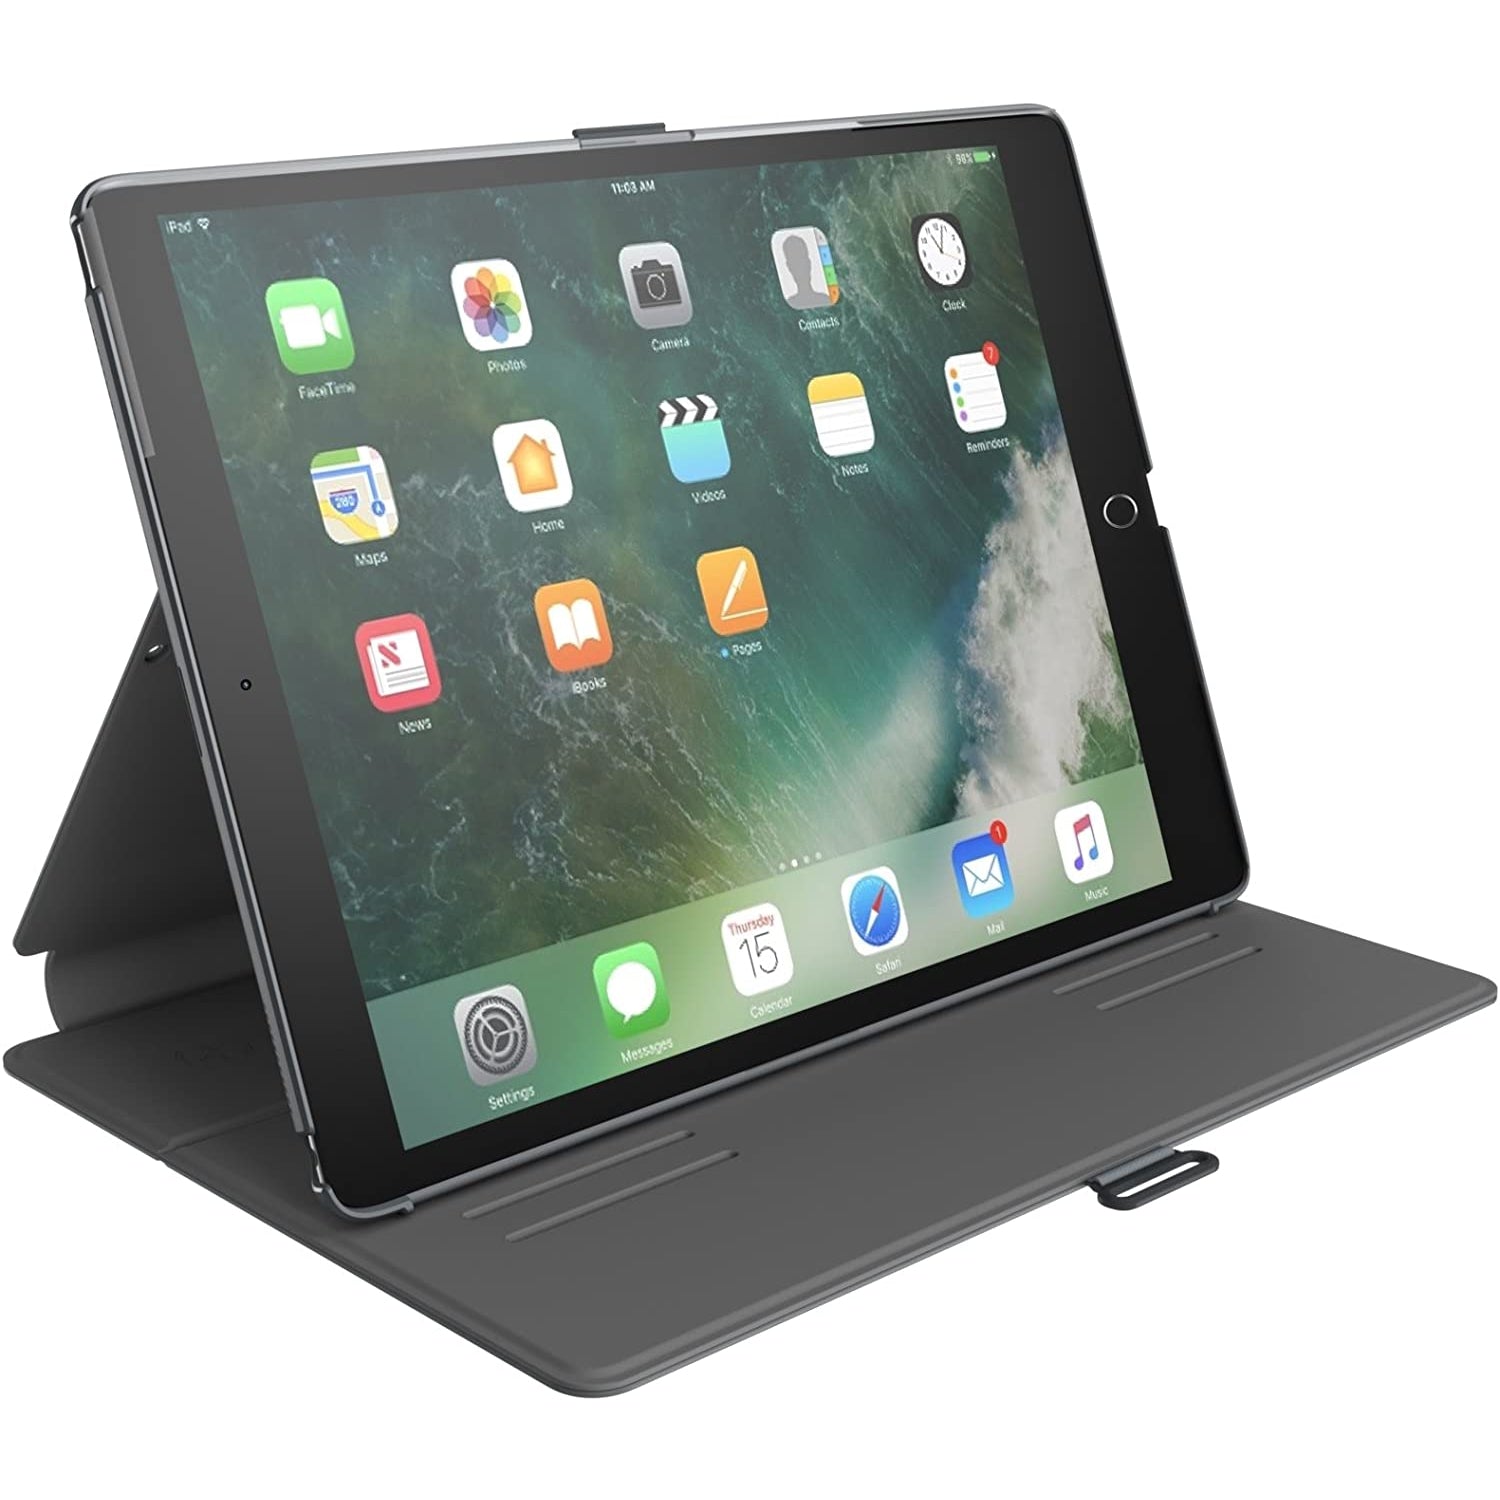 Speck Balance Folio Case for 10.5-Inch iPad Air (2019) - Grey